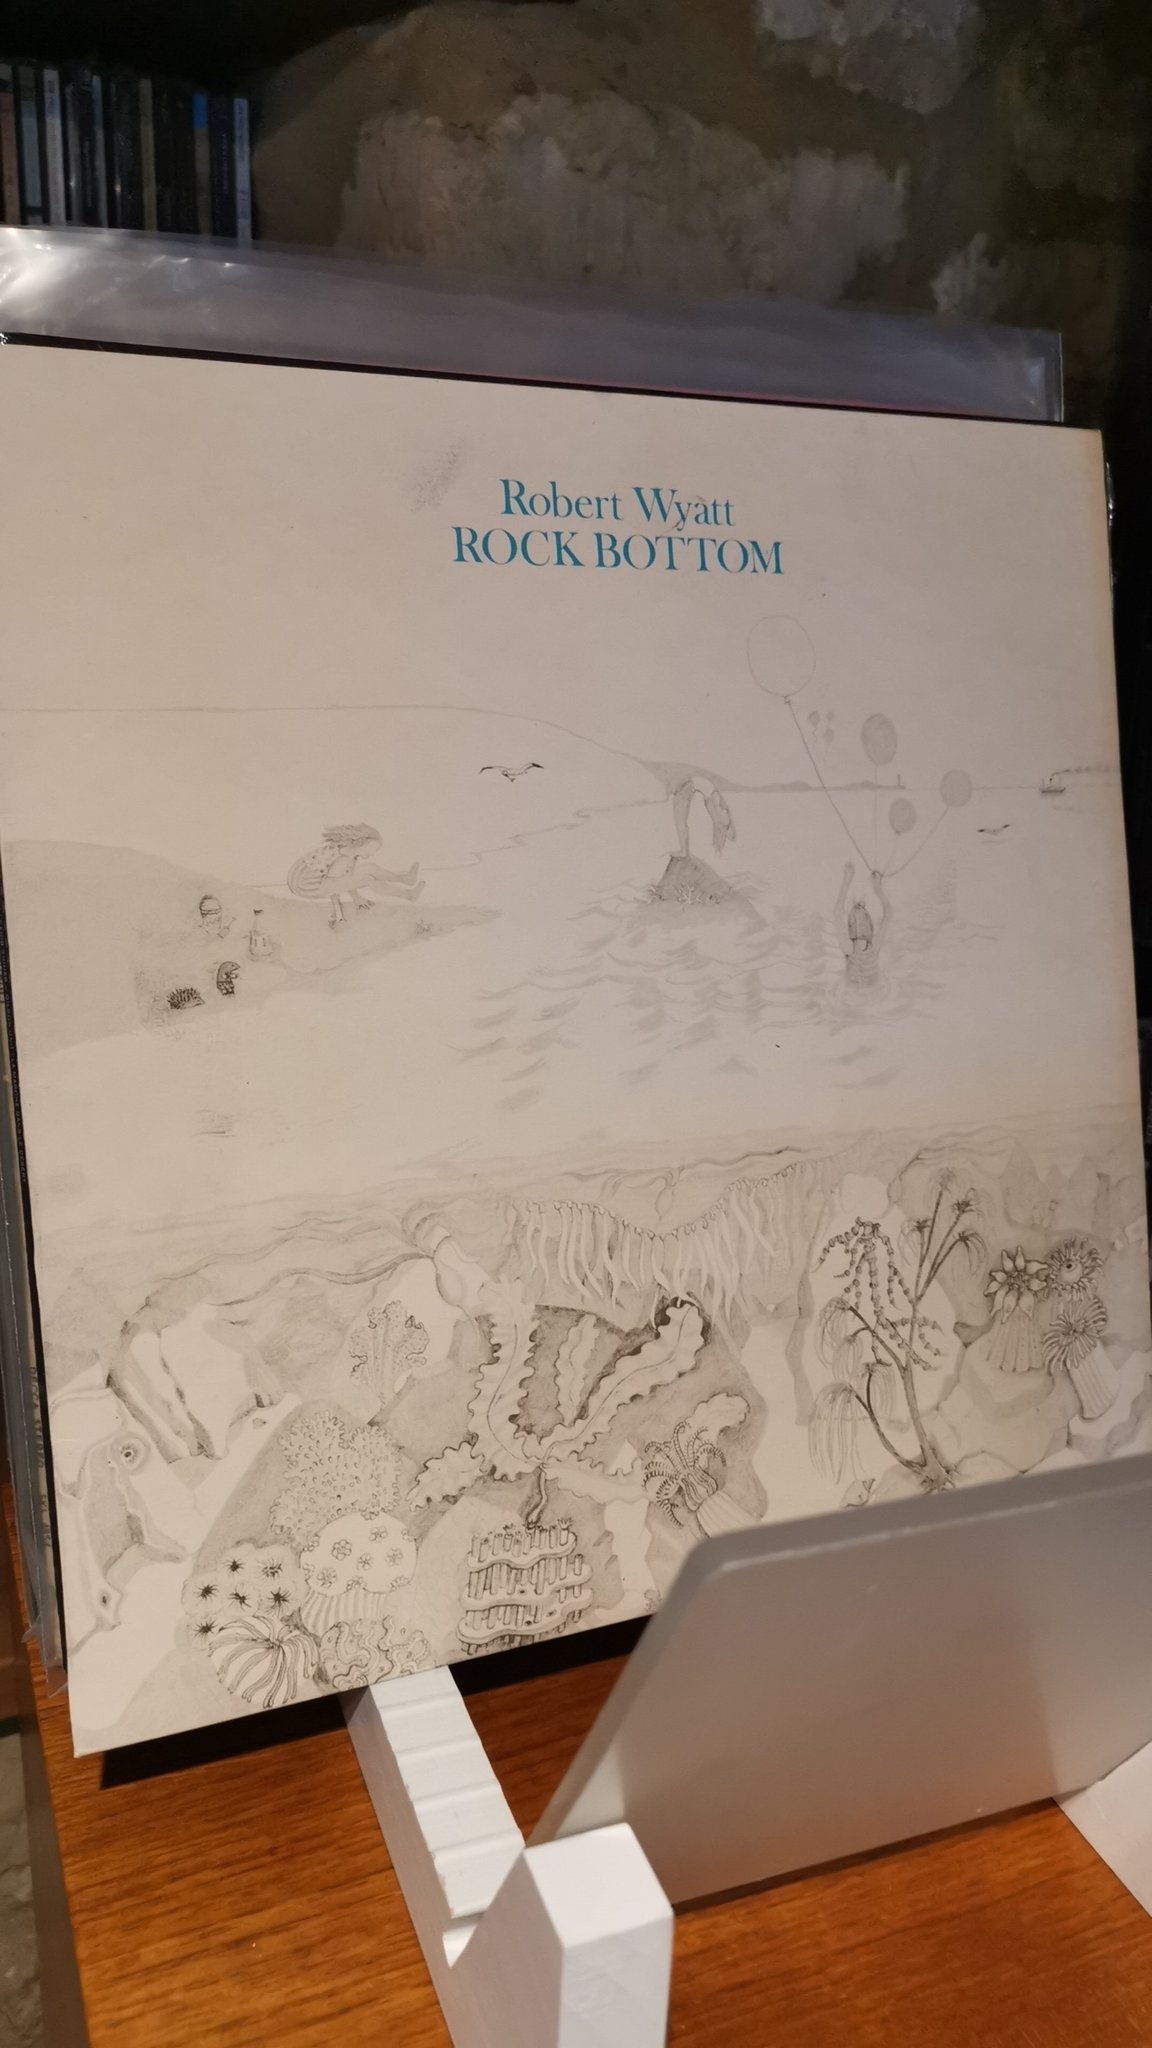 Happy birthday Robert Wyatt. NP: Rock Bottom  